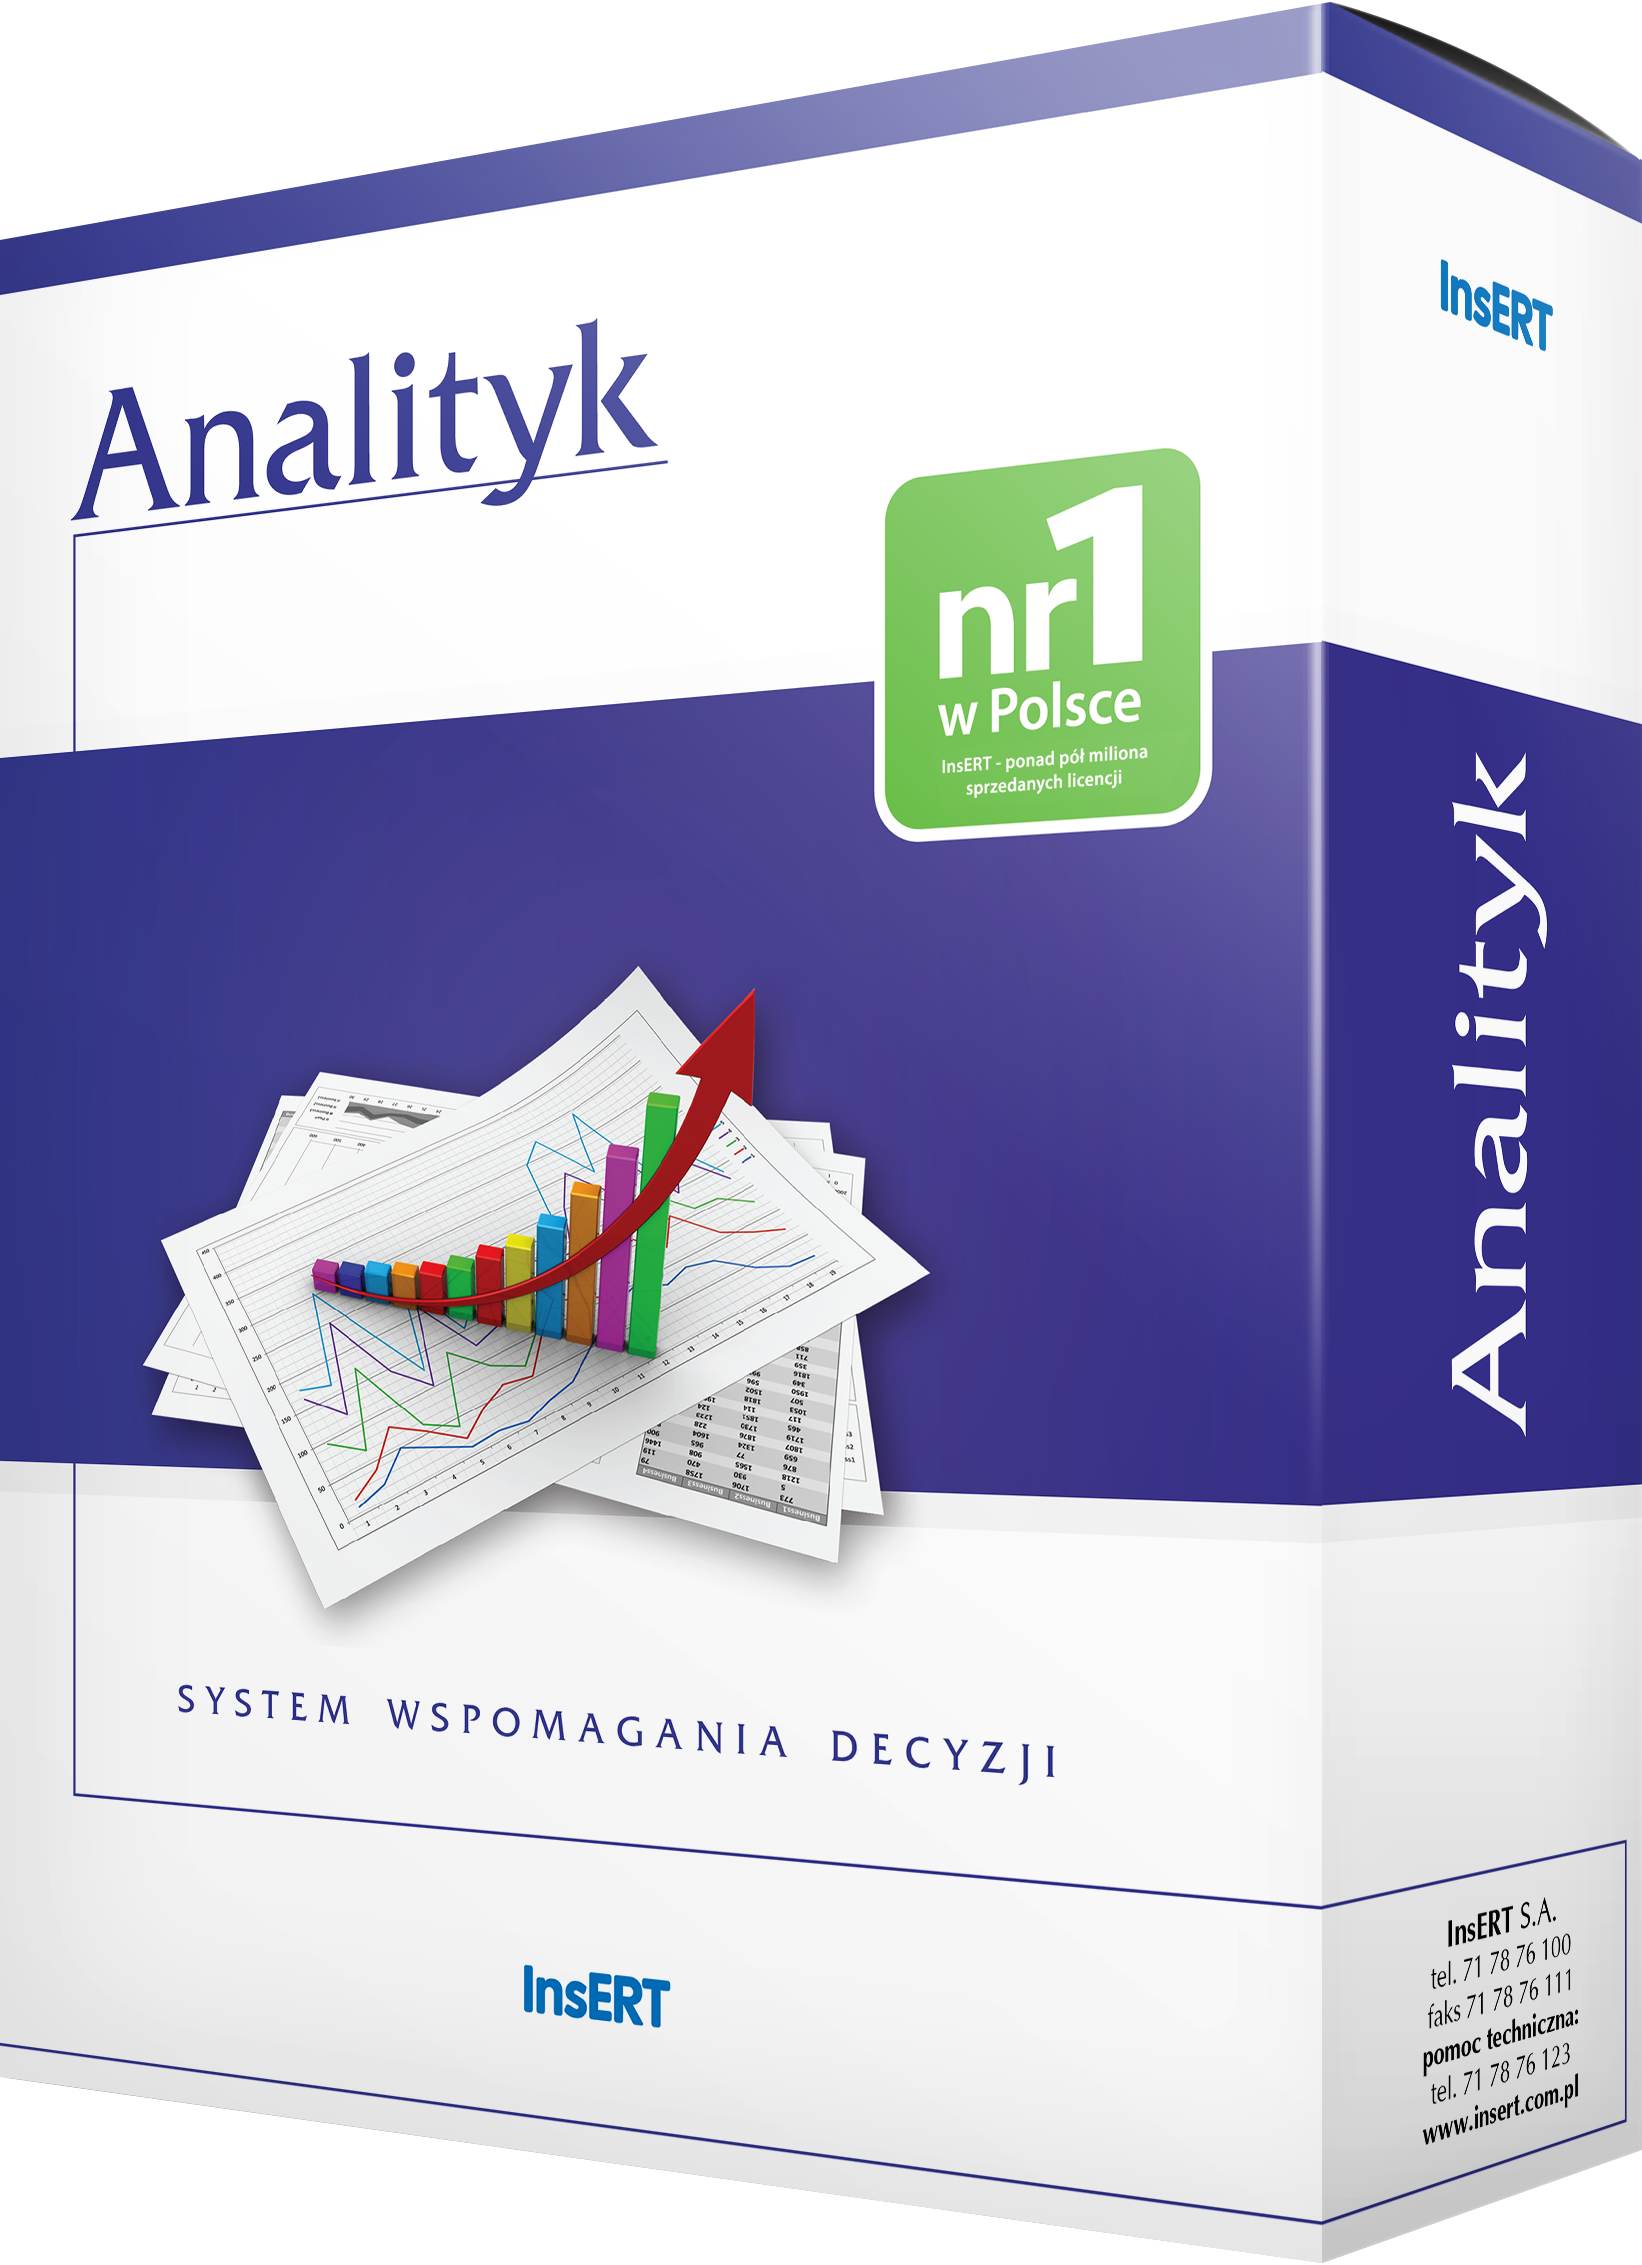 Analityk_pudelko